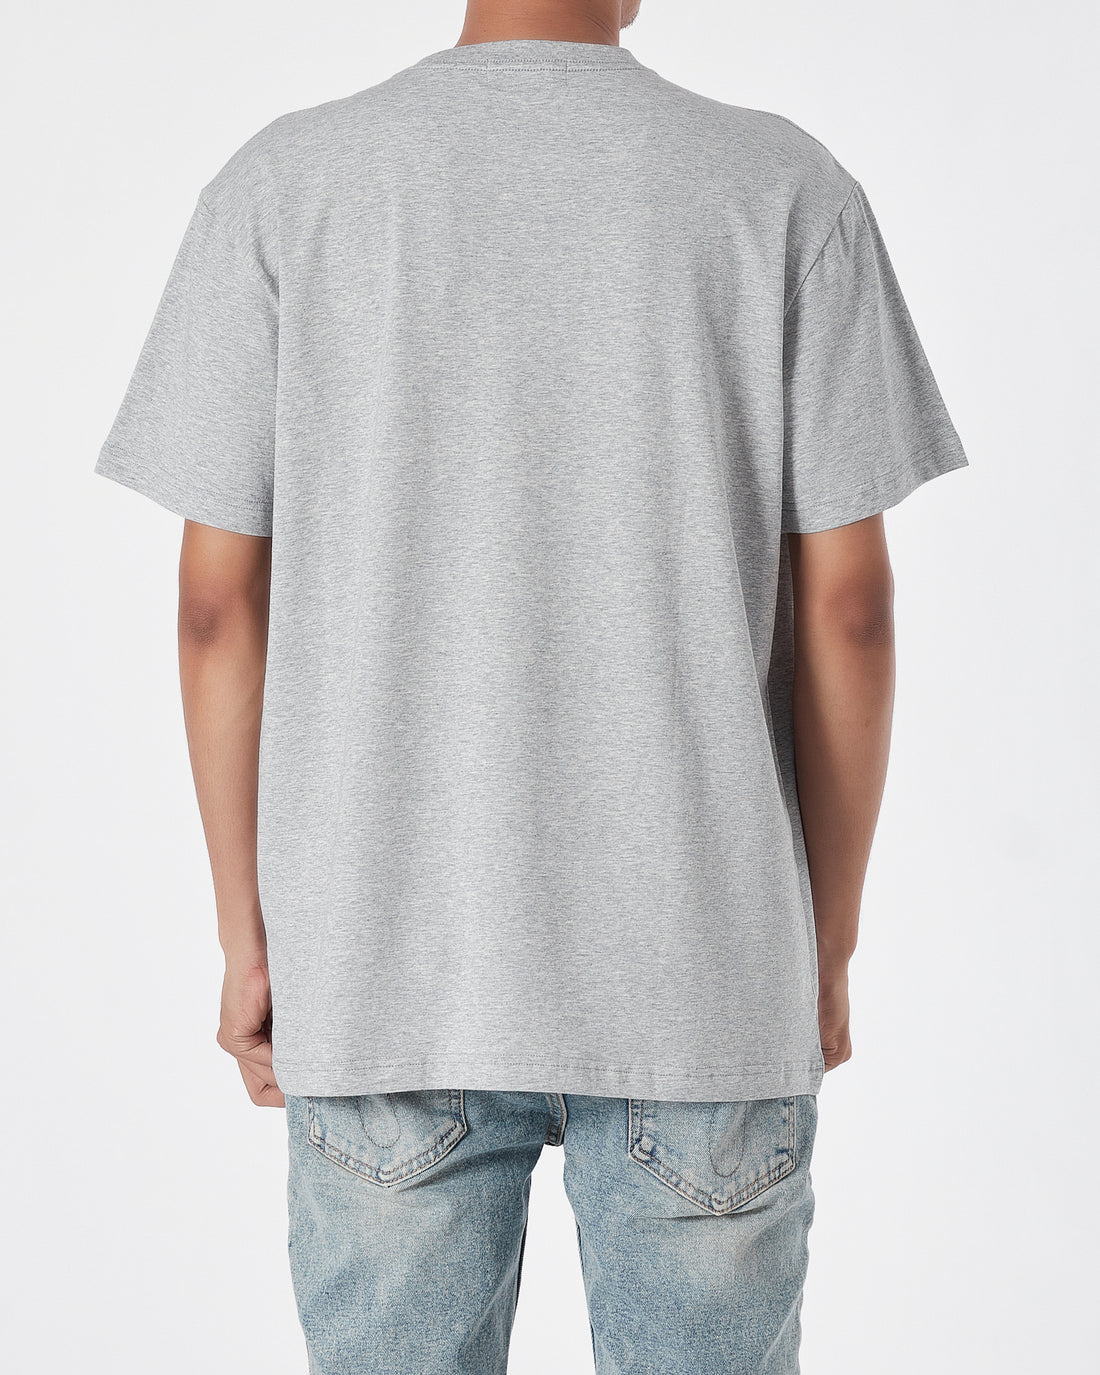 MKI Fox Embroidered Men Grey T-Shirt 14.90